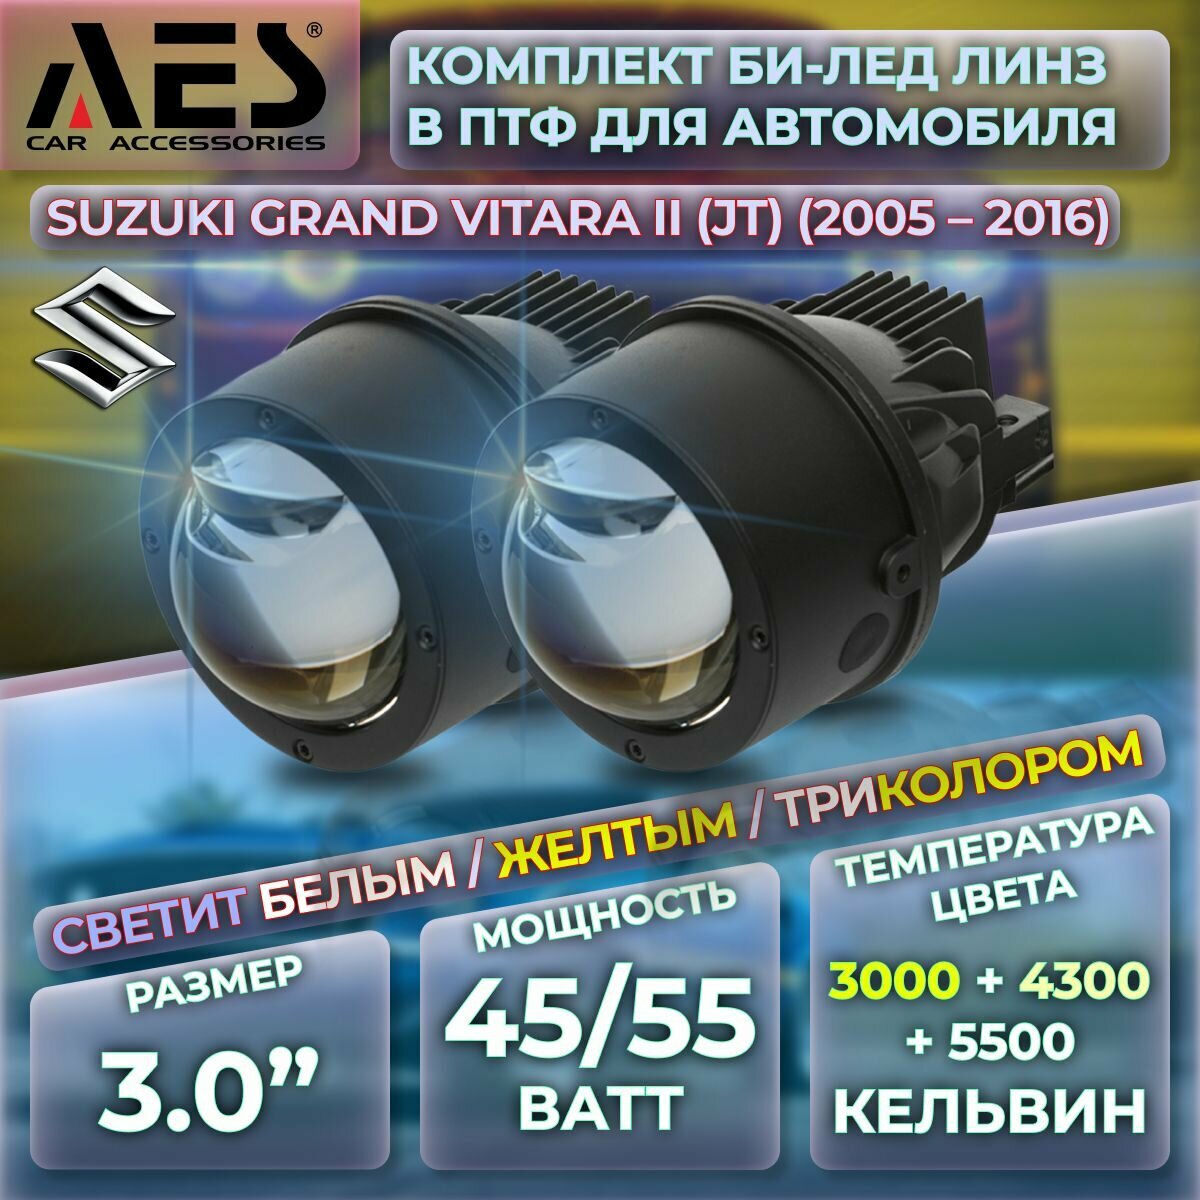 Комплект Би-лед линз в ПТФ для Suzuki Grand Vitara II (JT) (2005-2016) Q8proTriColor Foglight Bi-LED Laser 5500/4300/3000K (2 модуля 2 кронштейна)